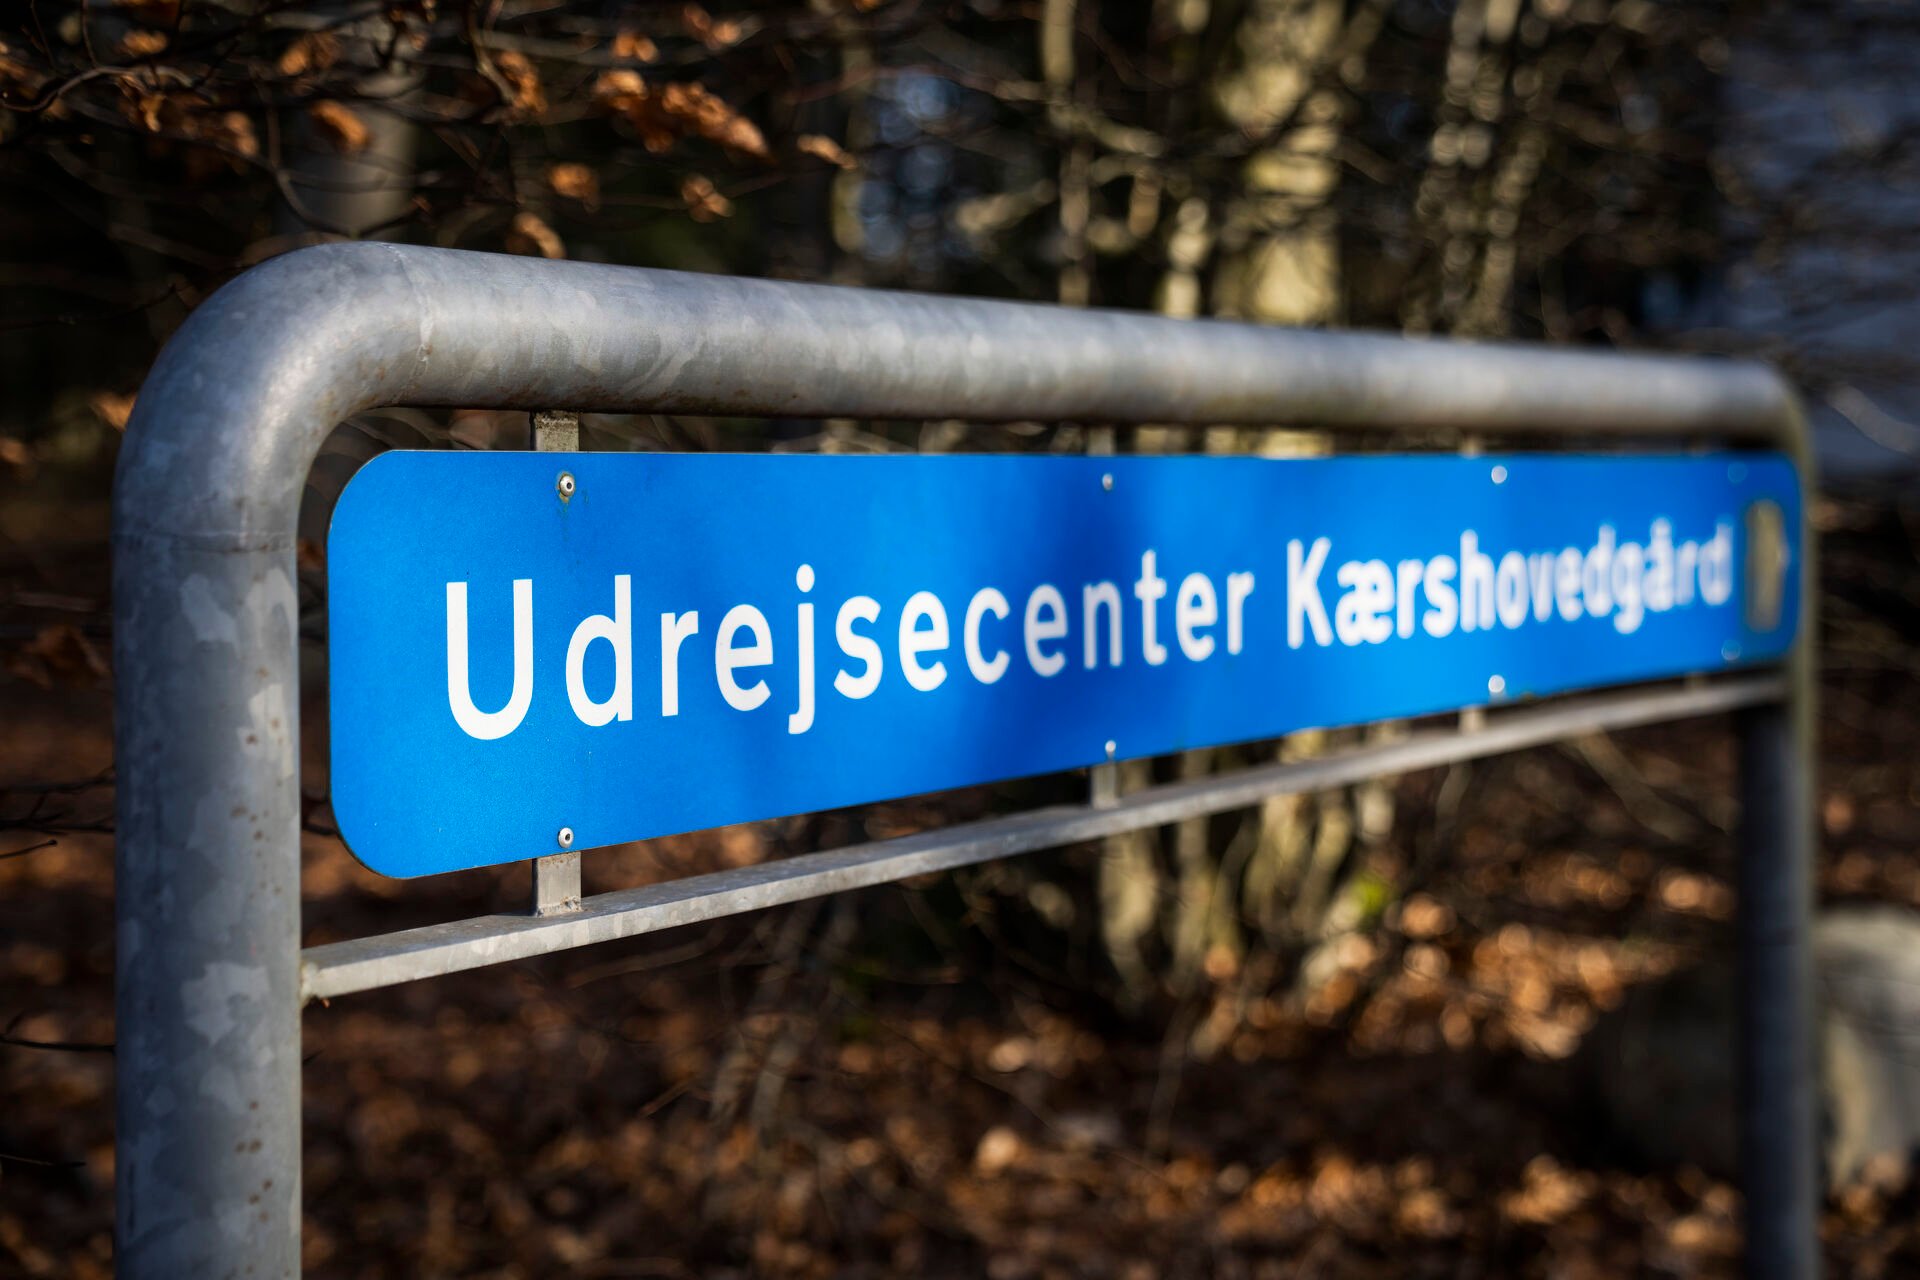 local-authority-demands-changes-at-denmark’s-kaershovedgard-asylum-camp